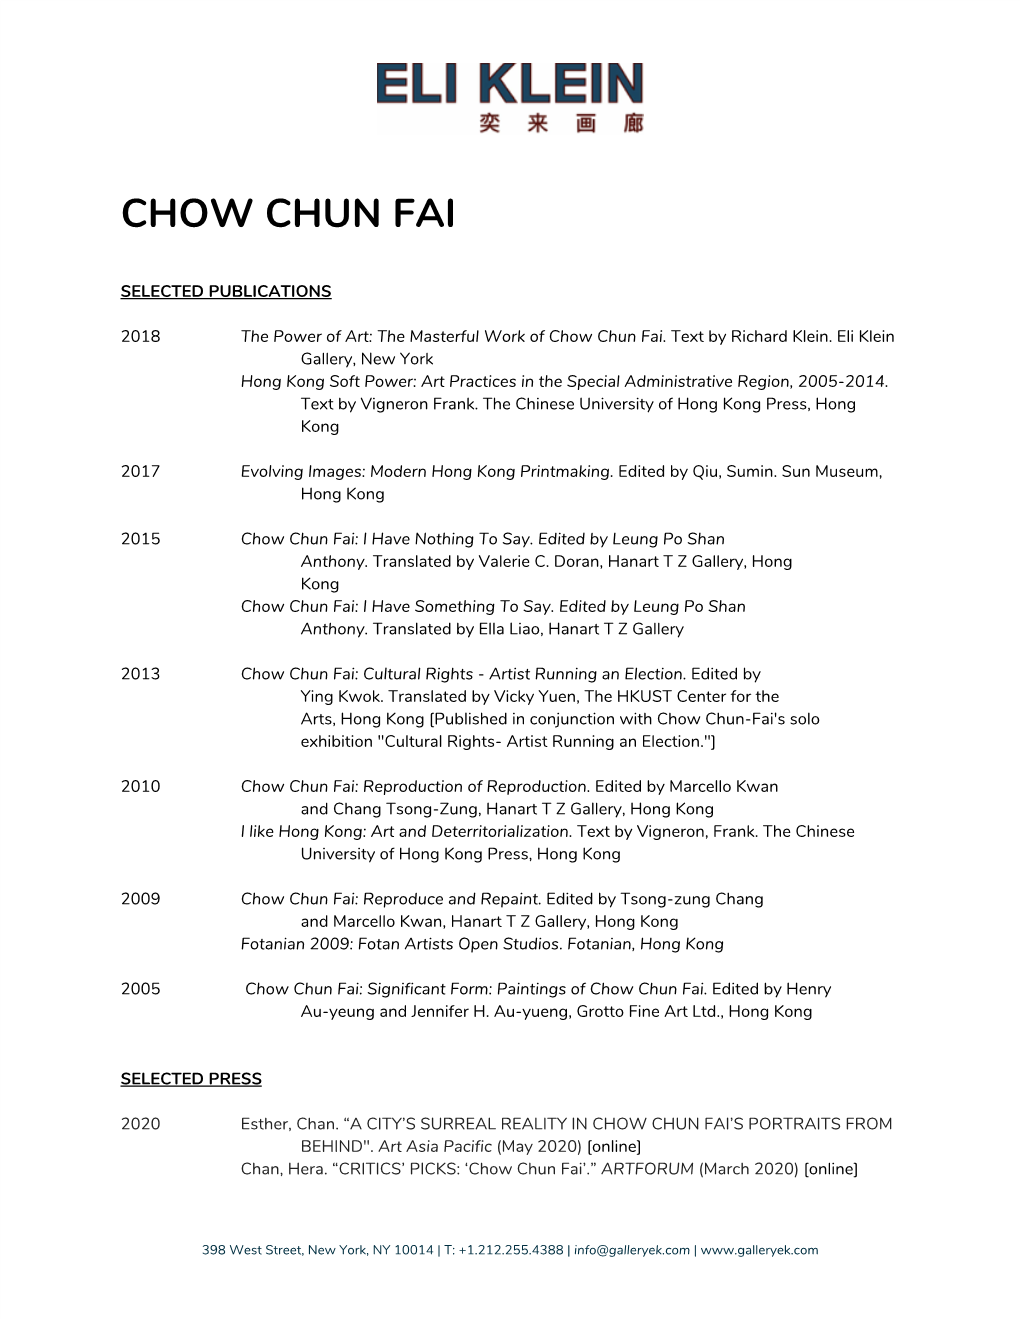 Chow Chun Fai